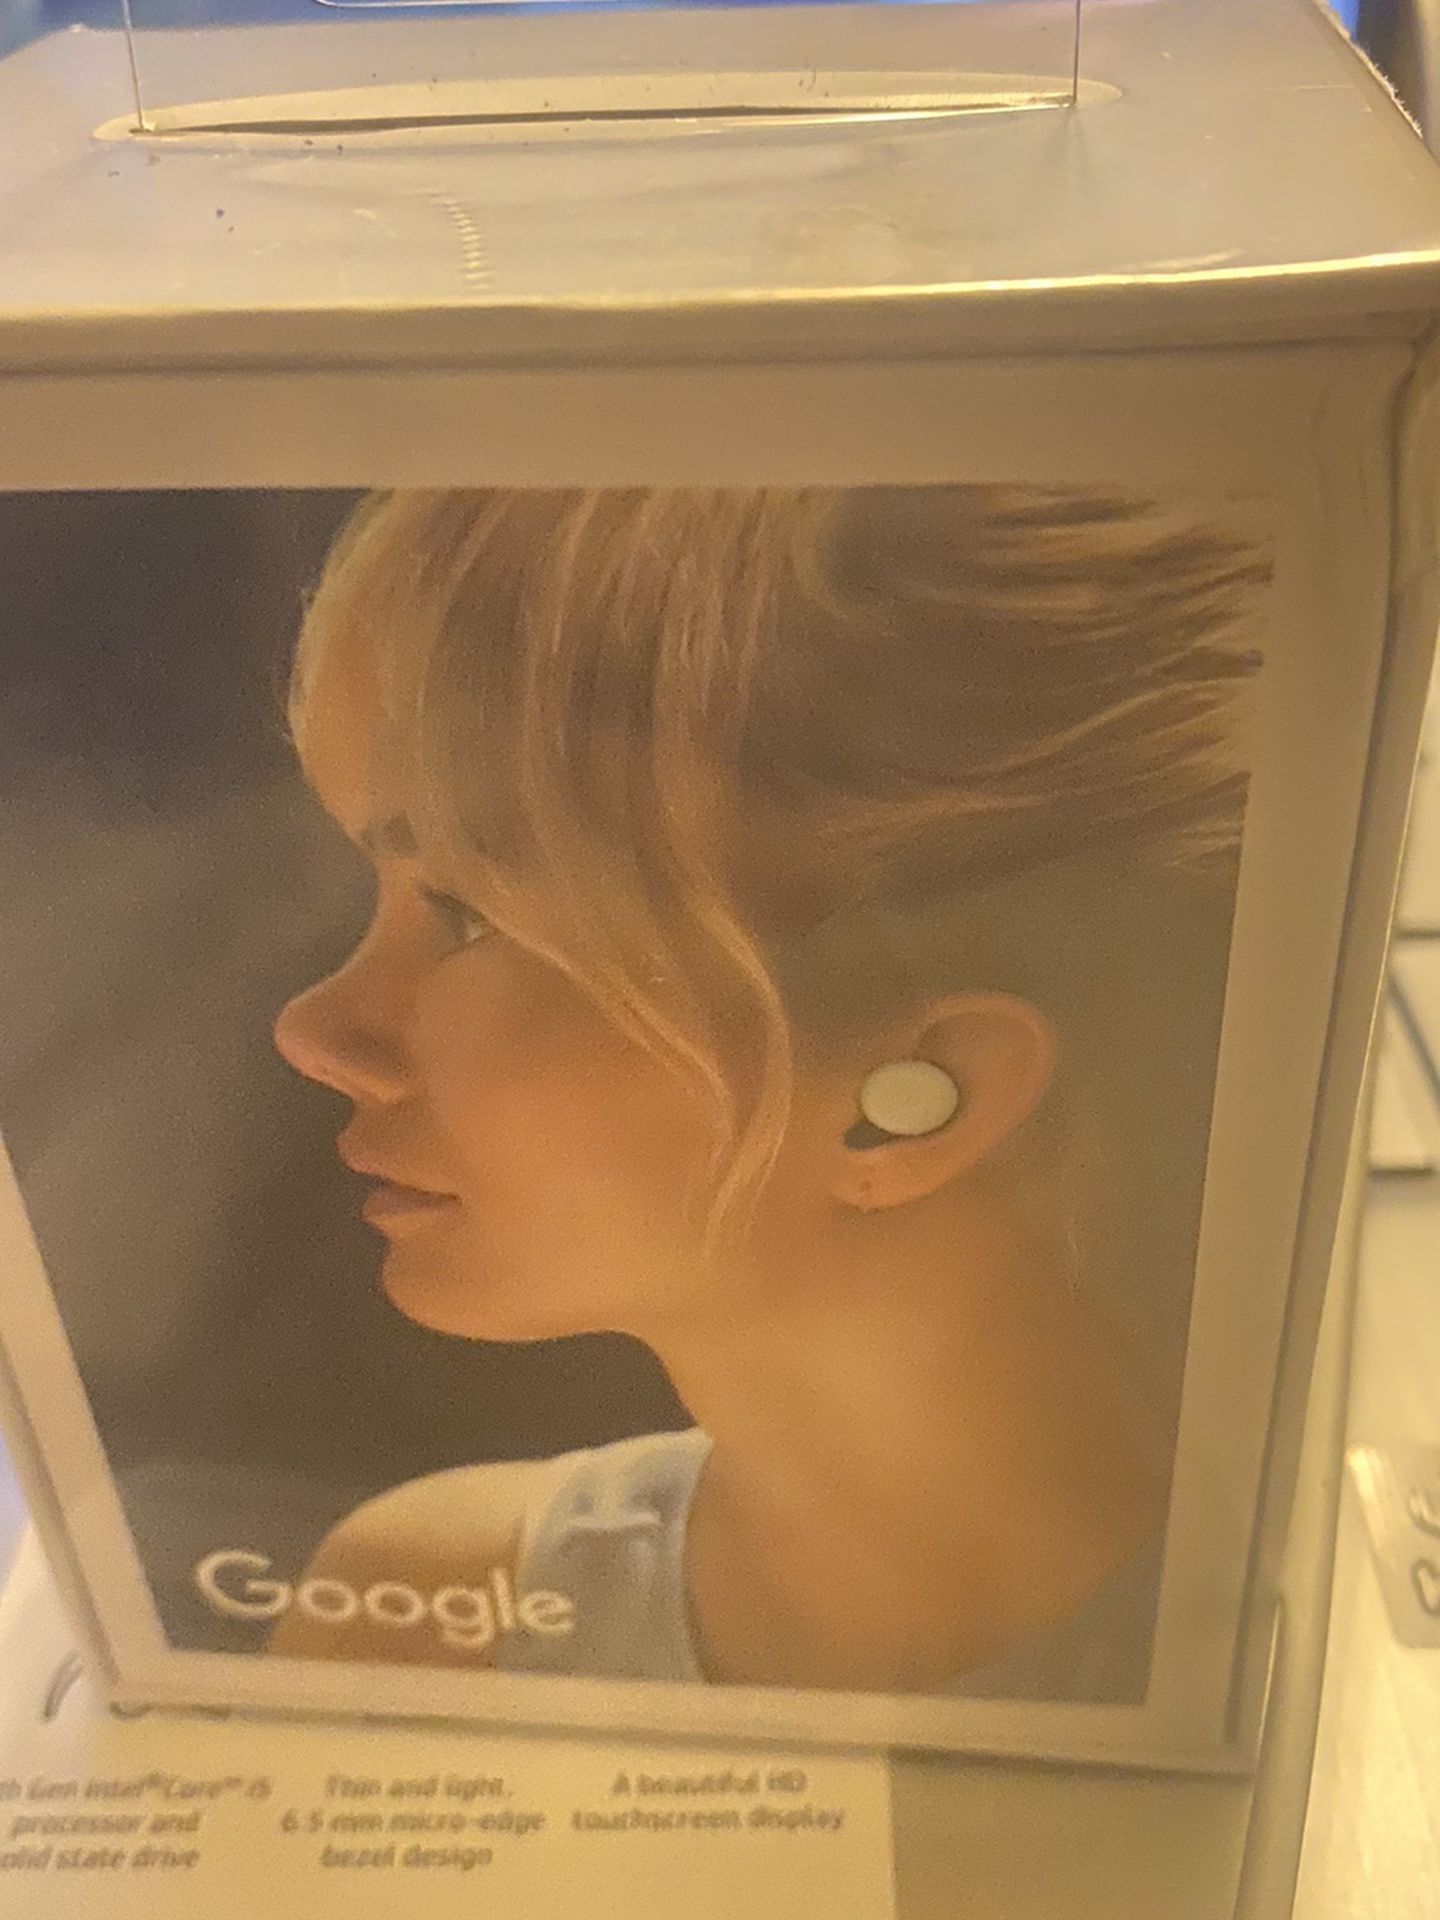 Google Ear Buds